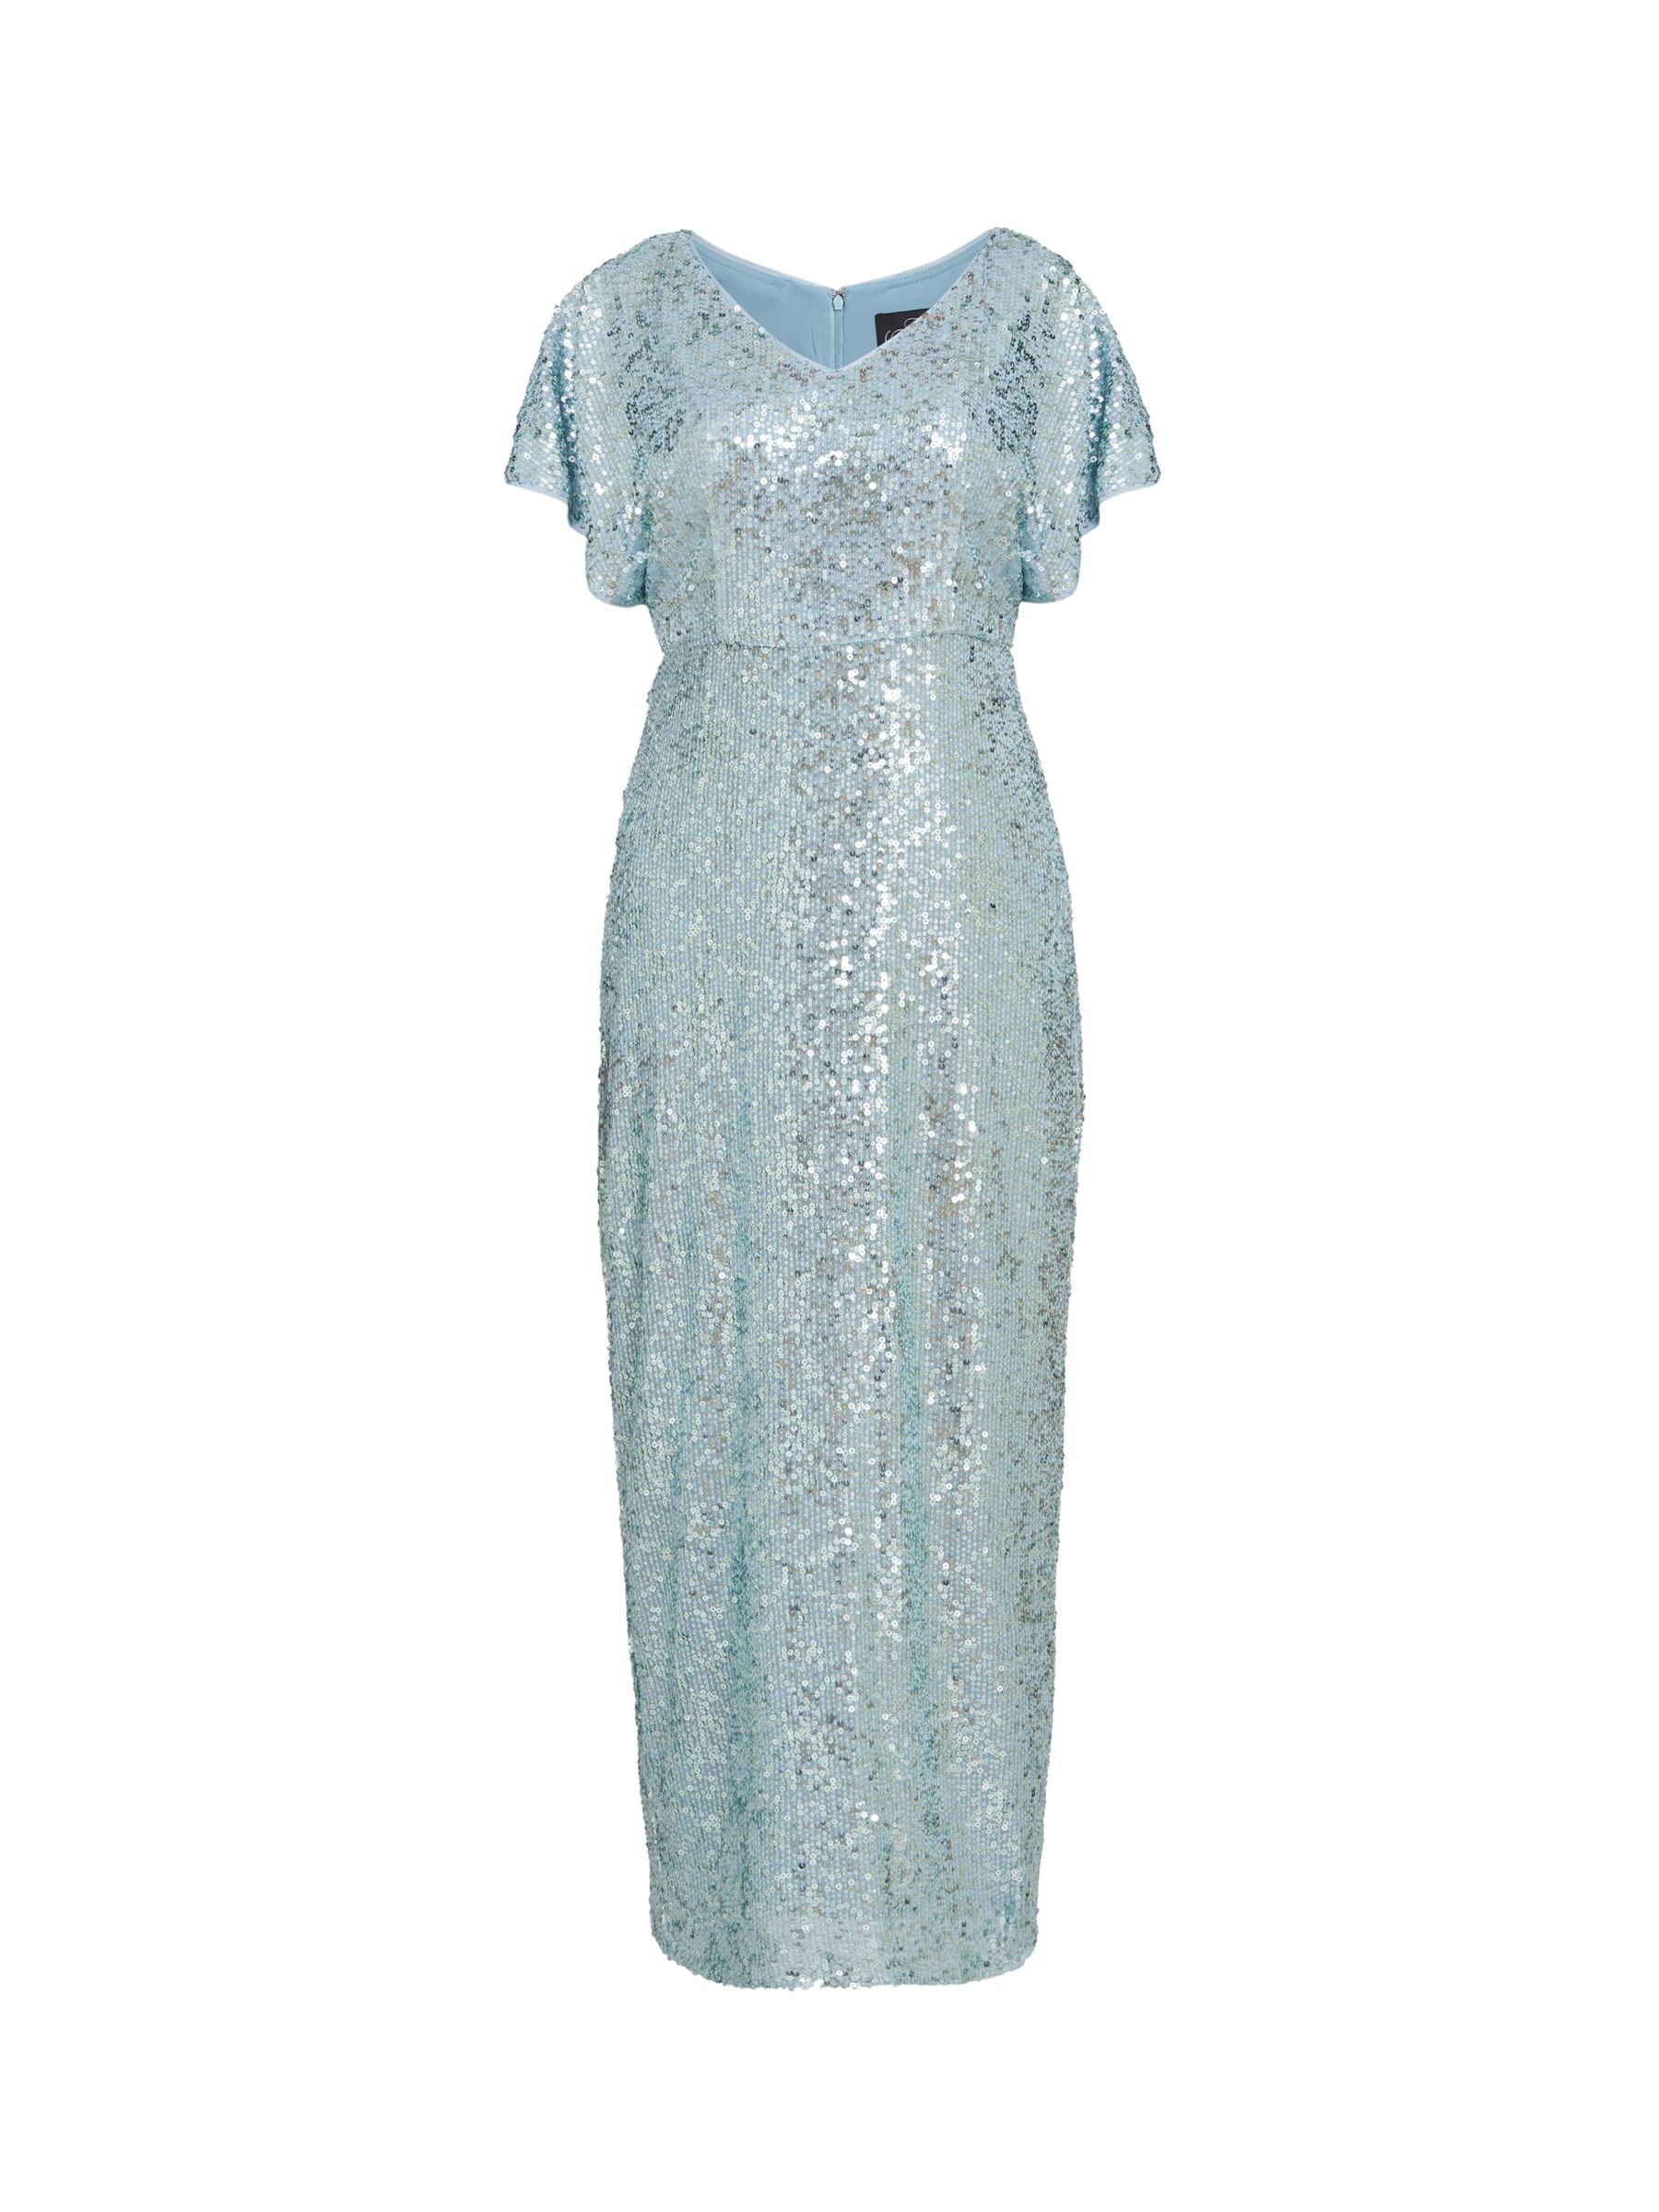 Gina Bacconi Courtney Sequin Maxi Dress, Sky Blue at John Lewis & Partners